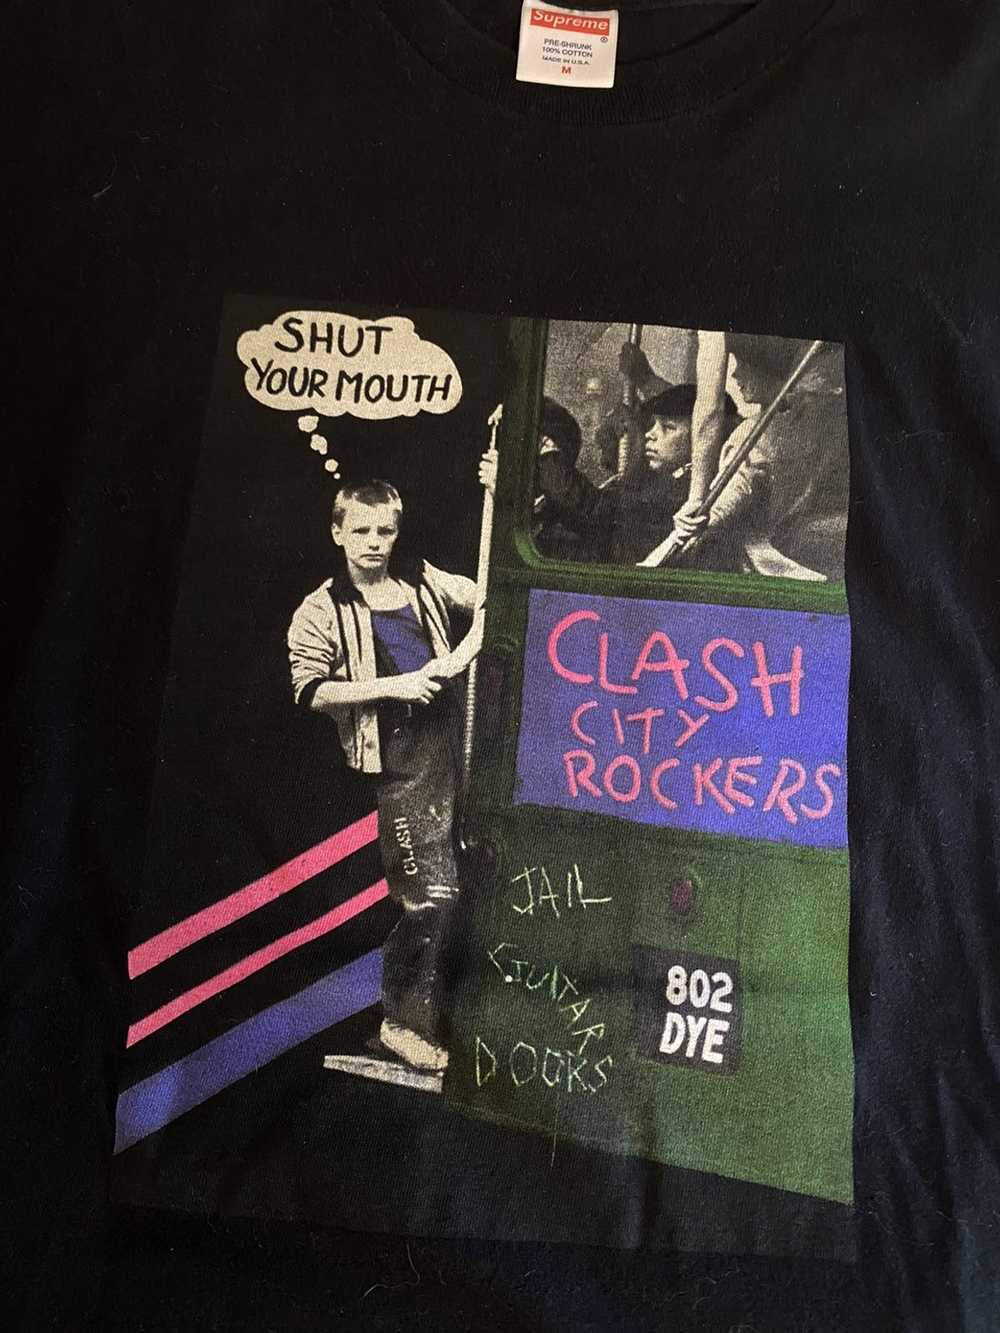 Supreme clash city rockers ss10 tee - image 2